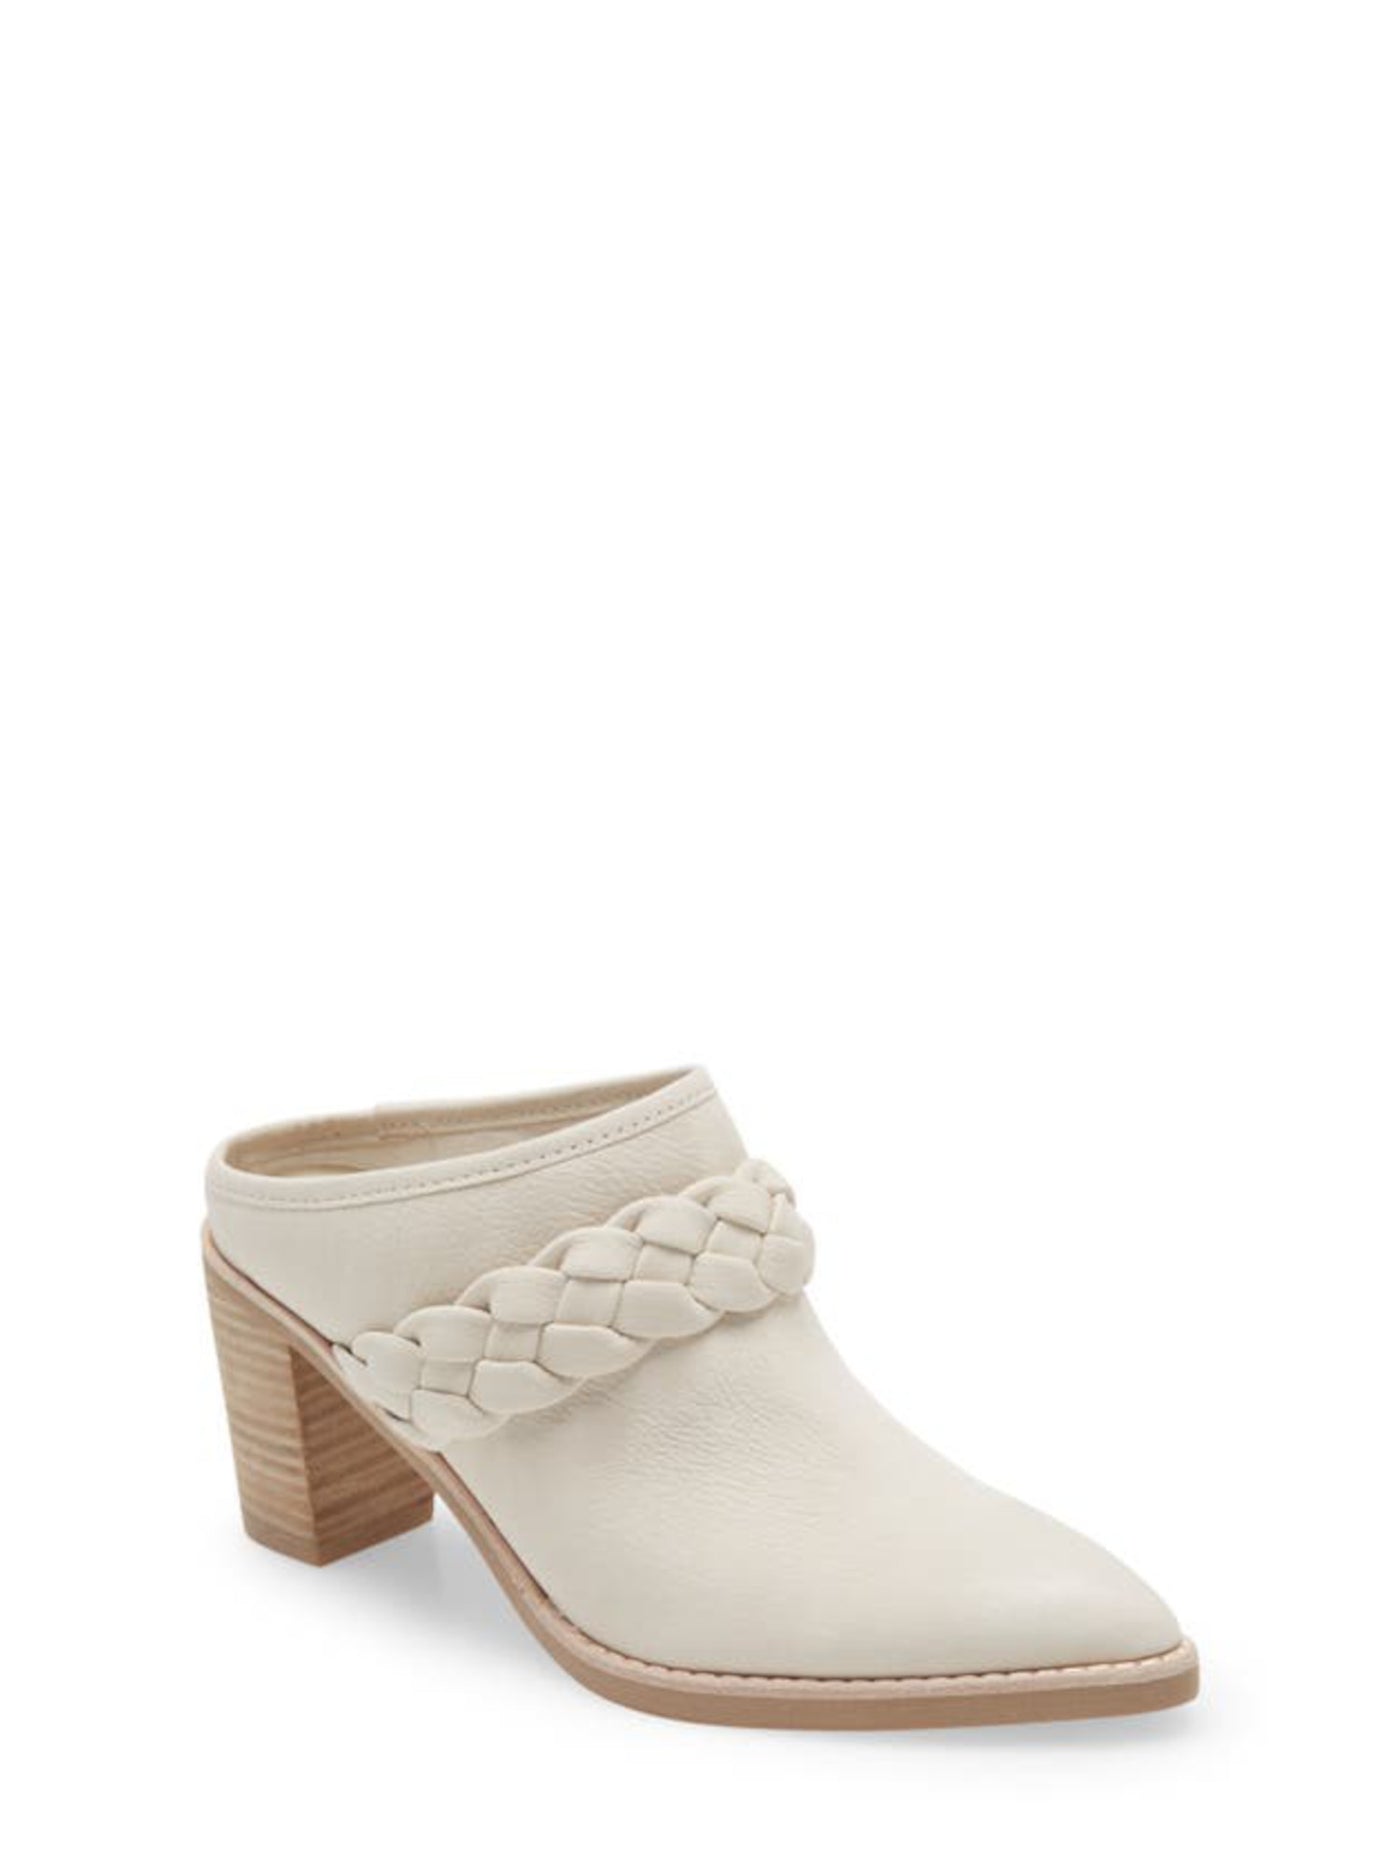 DOLCE VITA Womens Ivory Padded Braided Serla Pointed Toe Block Heel Slip On Leather Heeled Mules Shoes 9.5